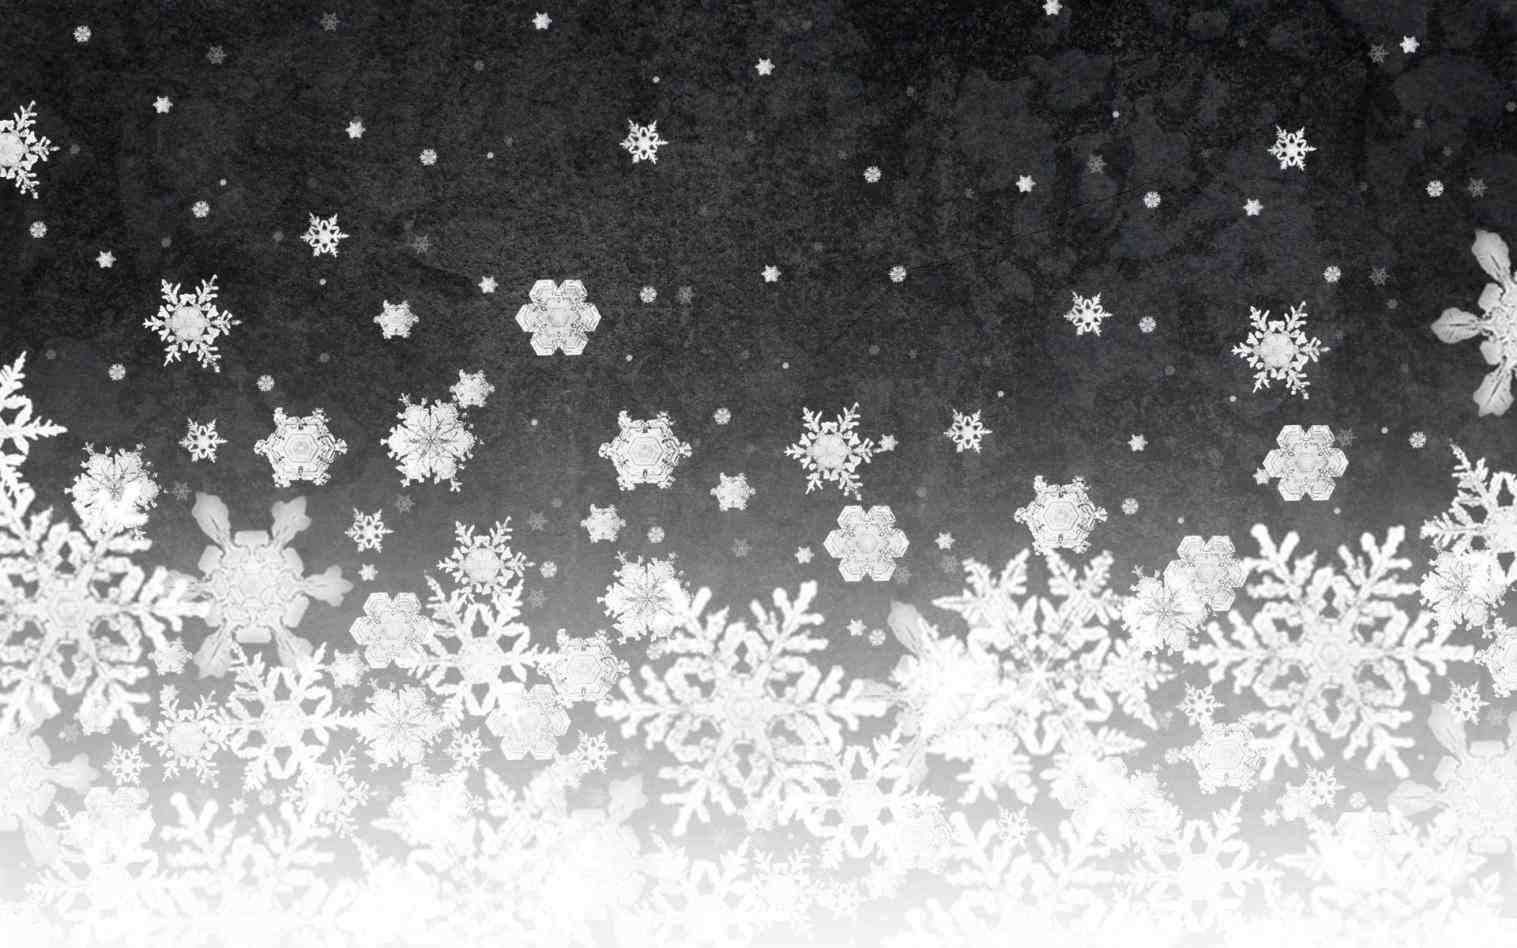 Black And White Christmas Wallpaper Ne Wall Image Image Black And